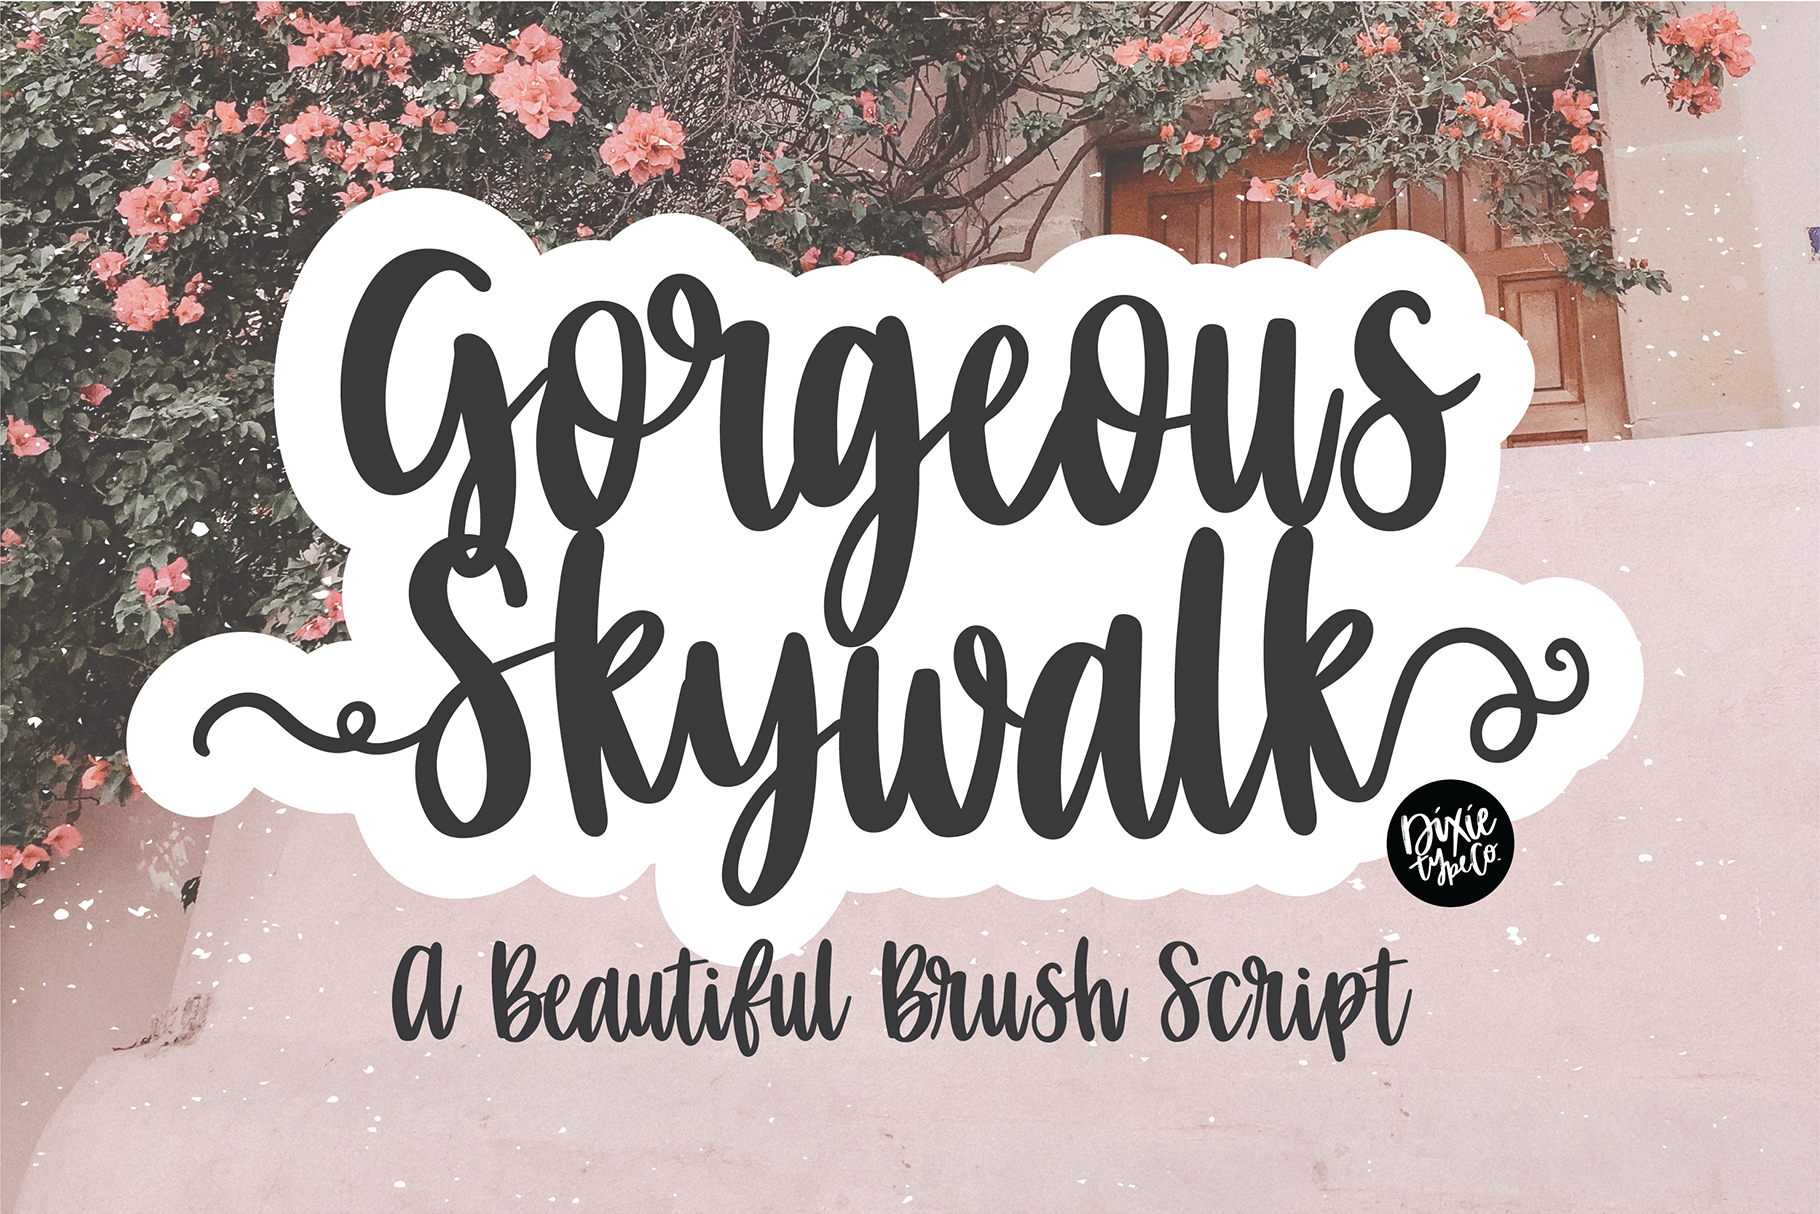 Gorgeous Skywalk A Beautiful Brush Script By Dixie Type Co Thehungryjpeg Com